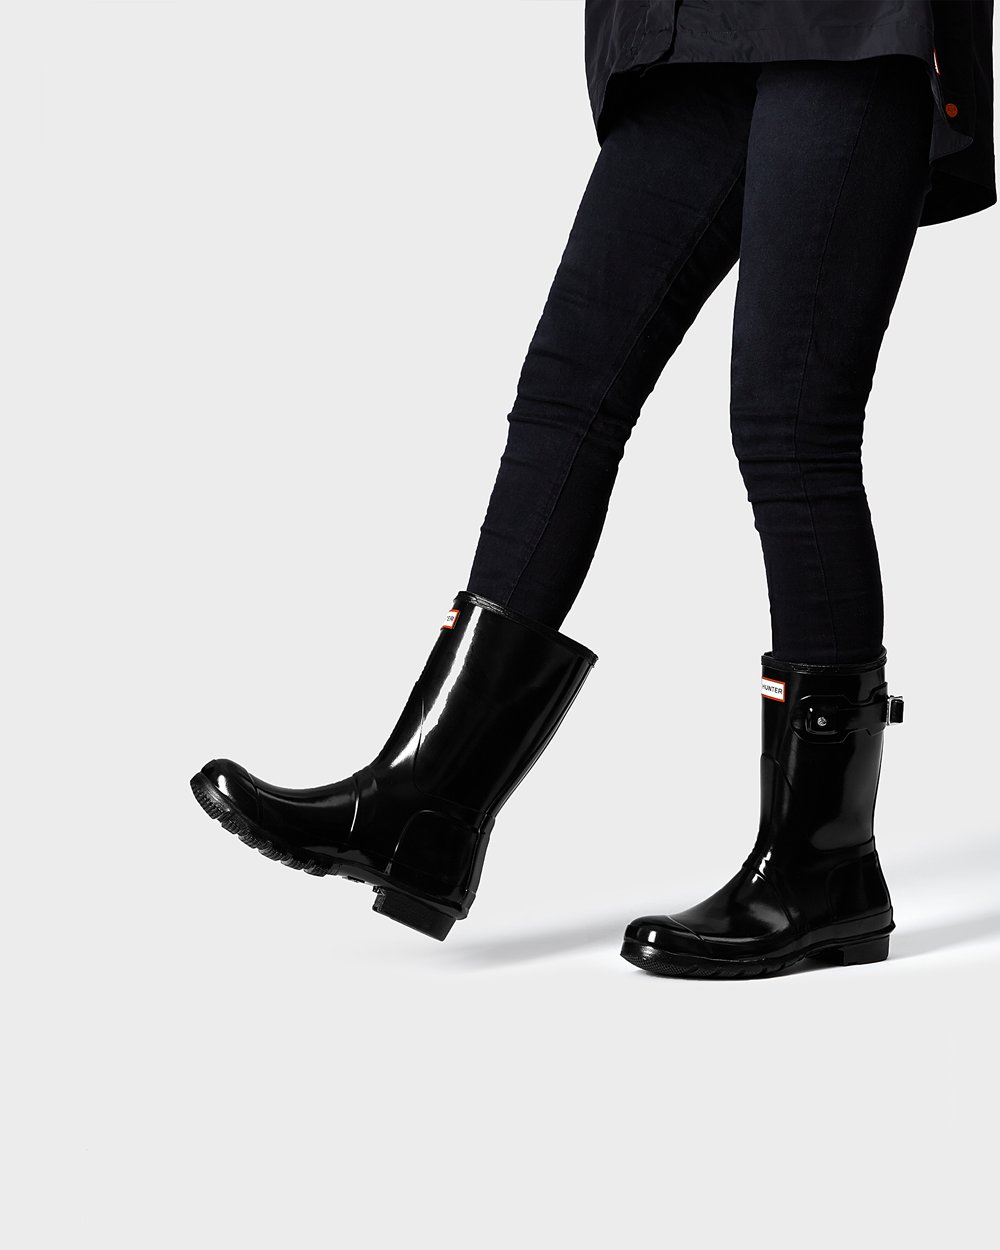 Womens Short Rain Boots - Hunter Original Gloss (10UKIAGPC) - Black